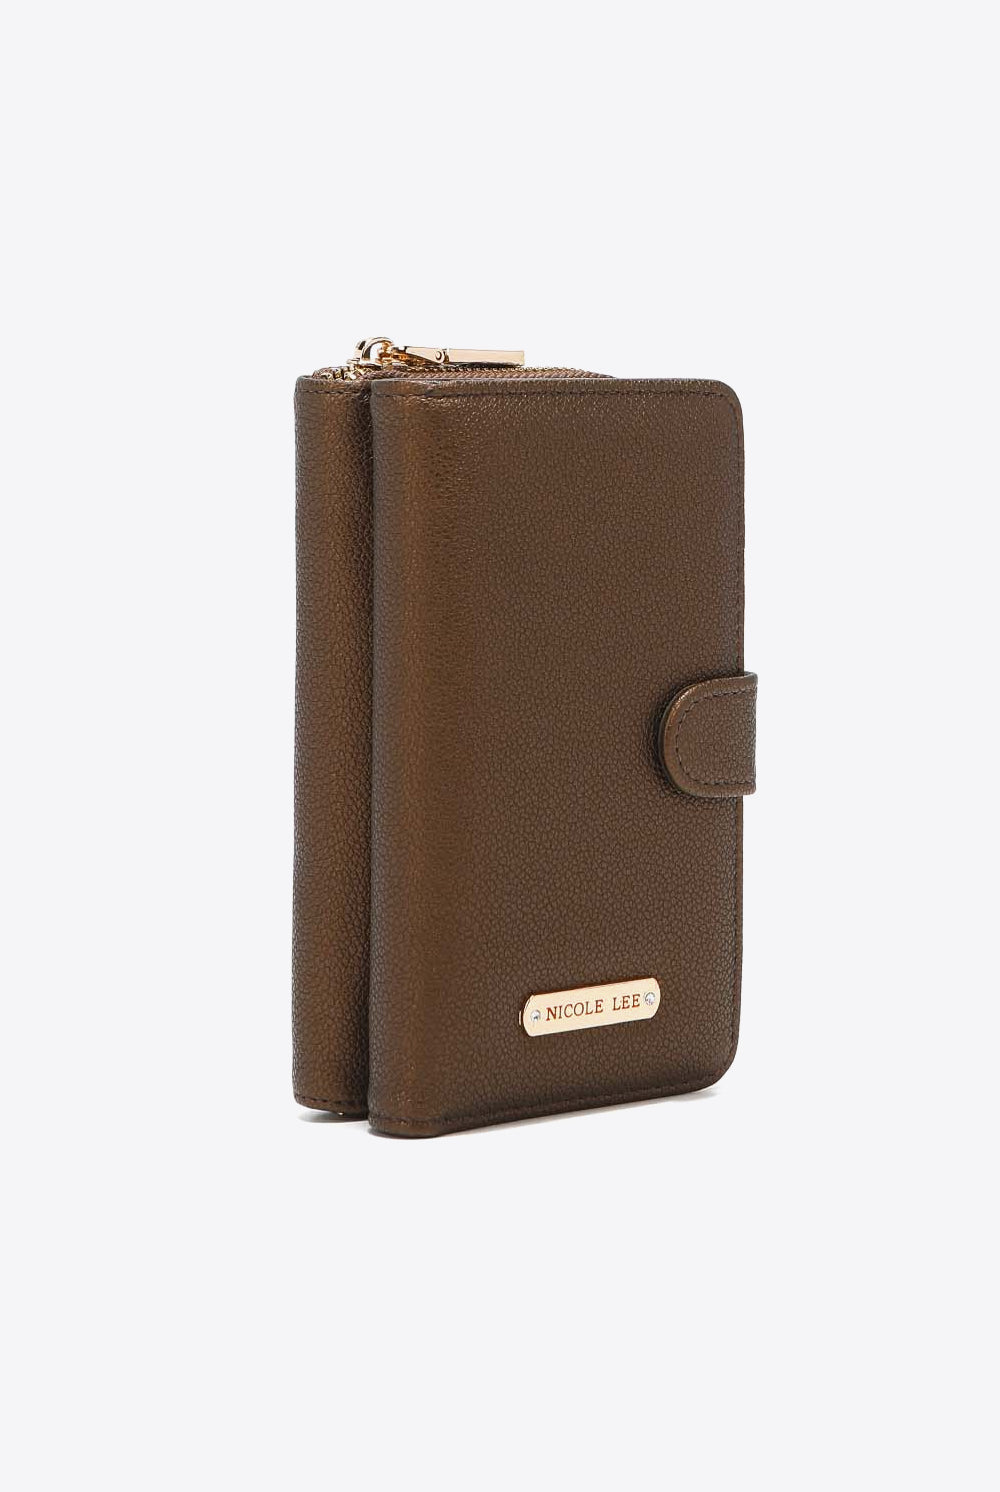 Dark Olive Green Nicole Lee USA Two-Piece Crossbody Phone Case Wallet Handbags